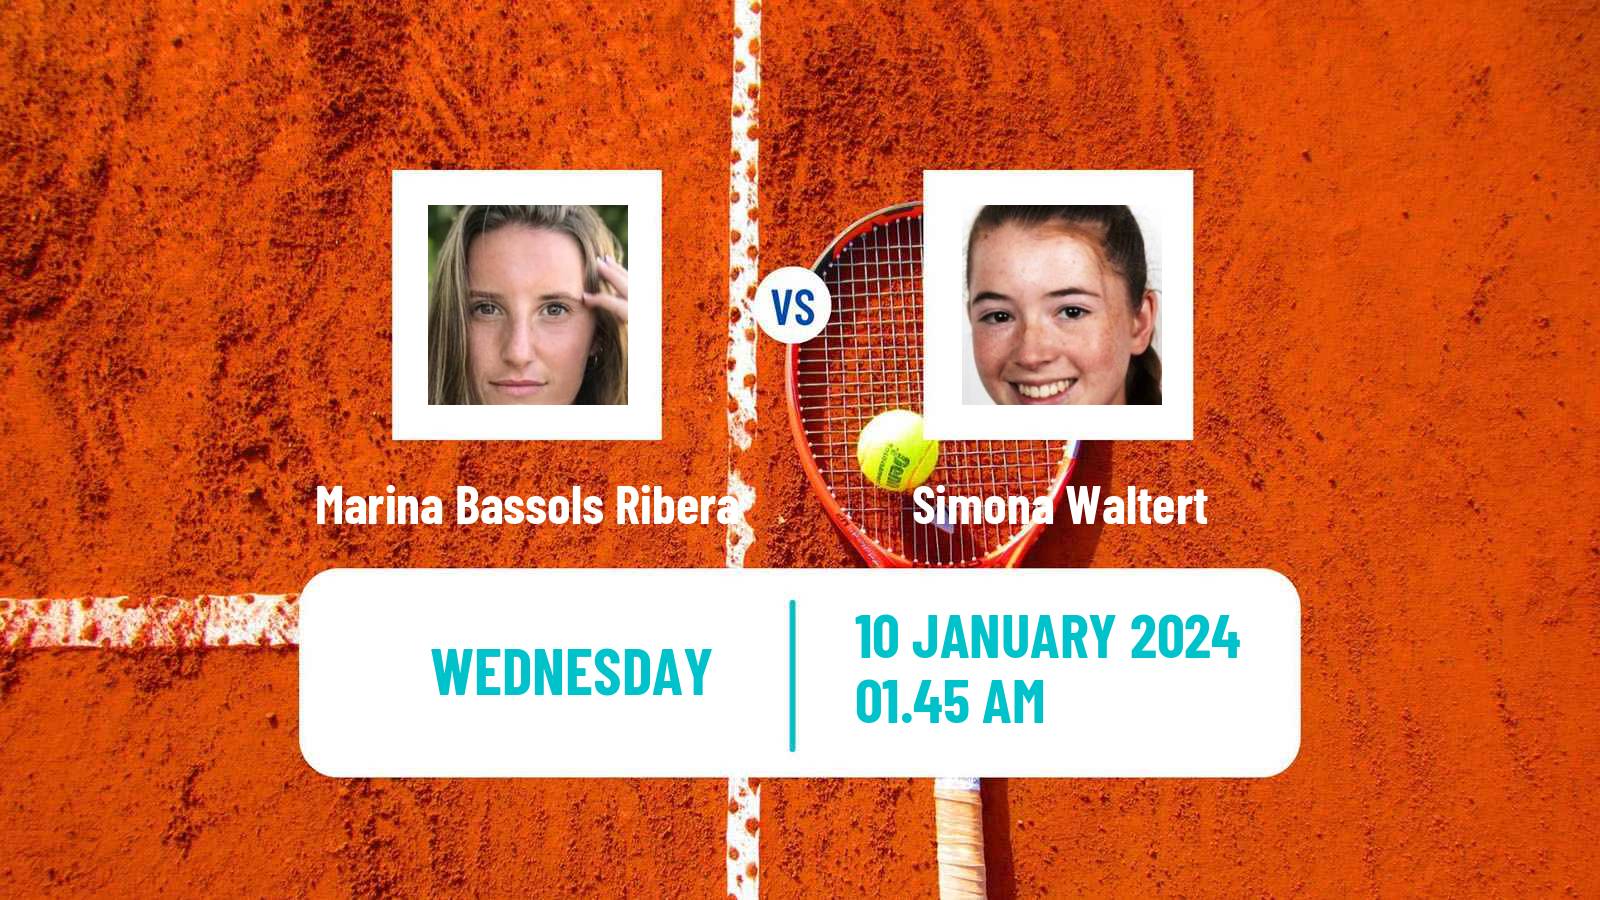 Tennis WTA Australian Open Marina Bassols Ribera - Simona Waltert